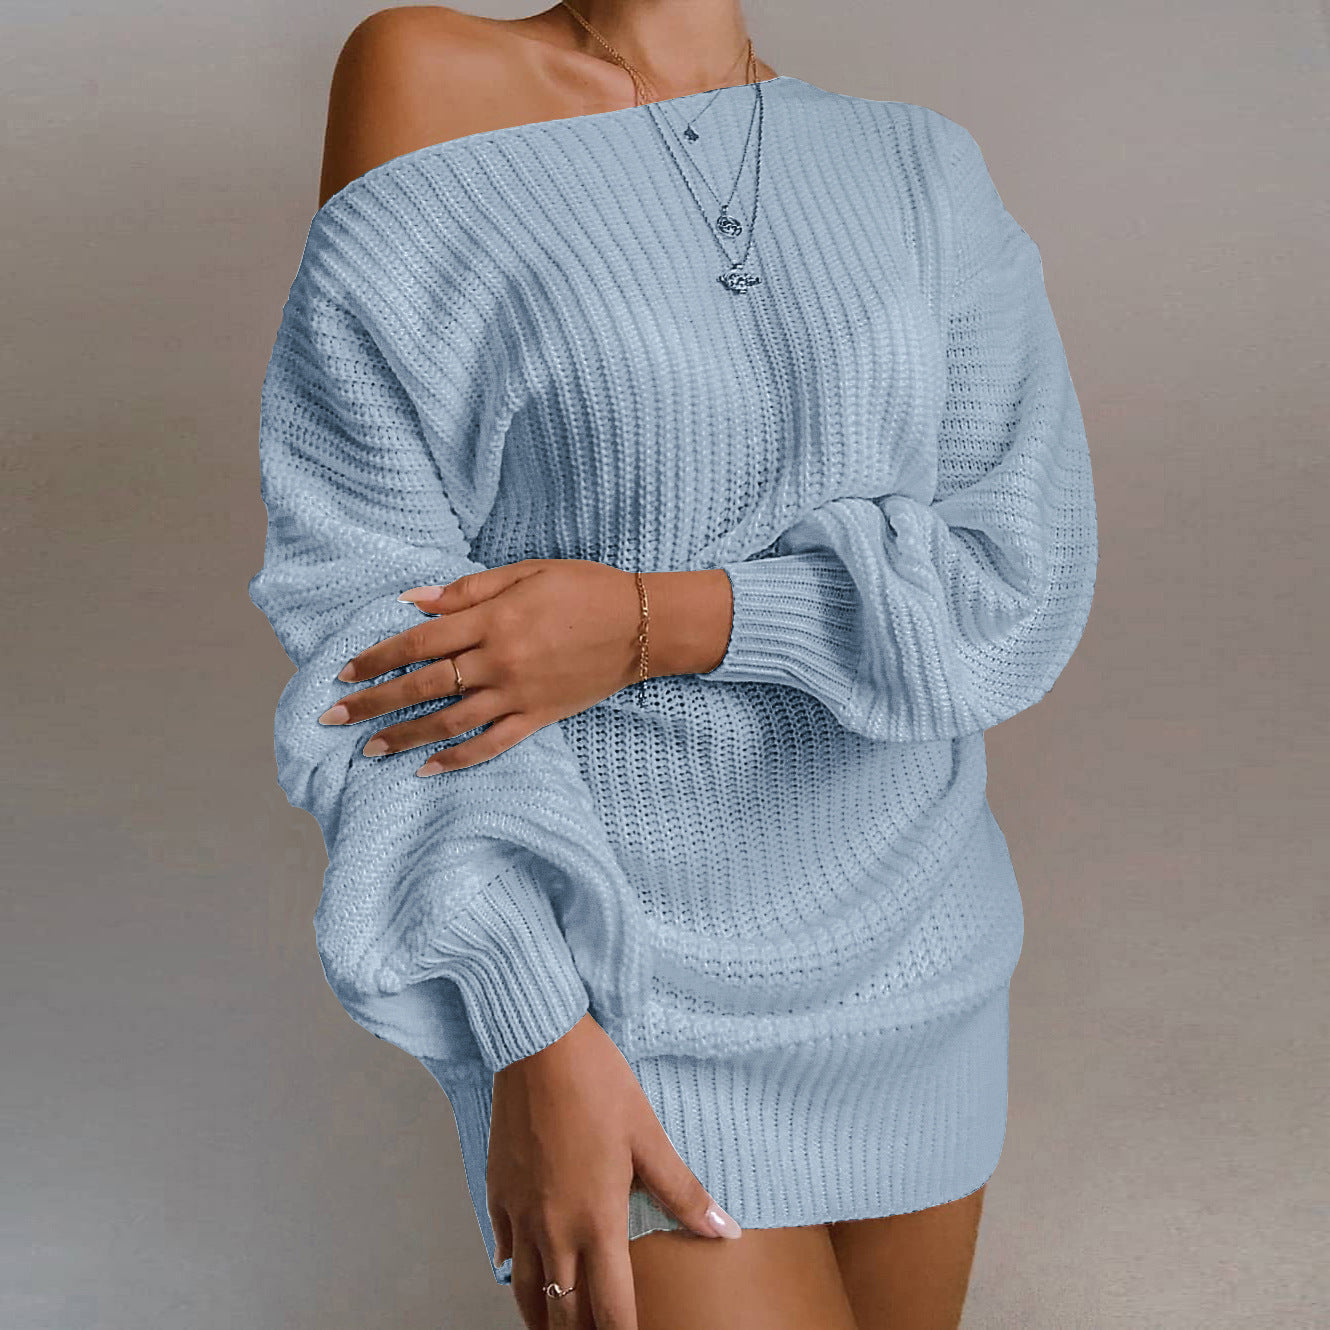 Strapless lantern sleeve knitted sweater dress